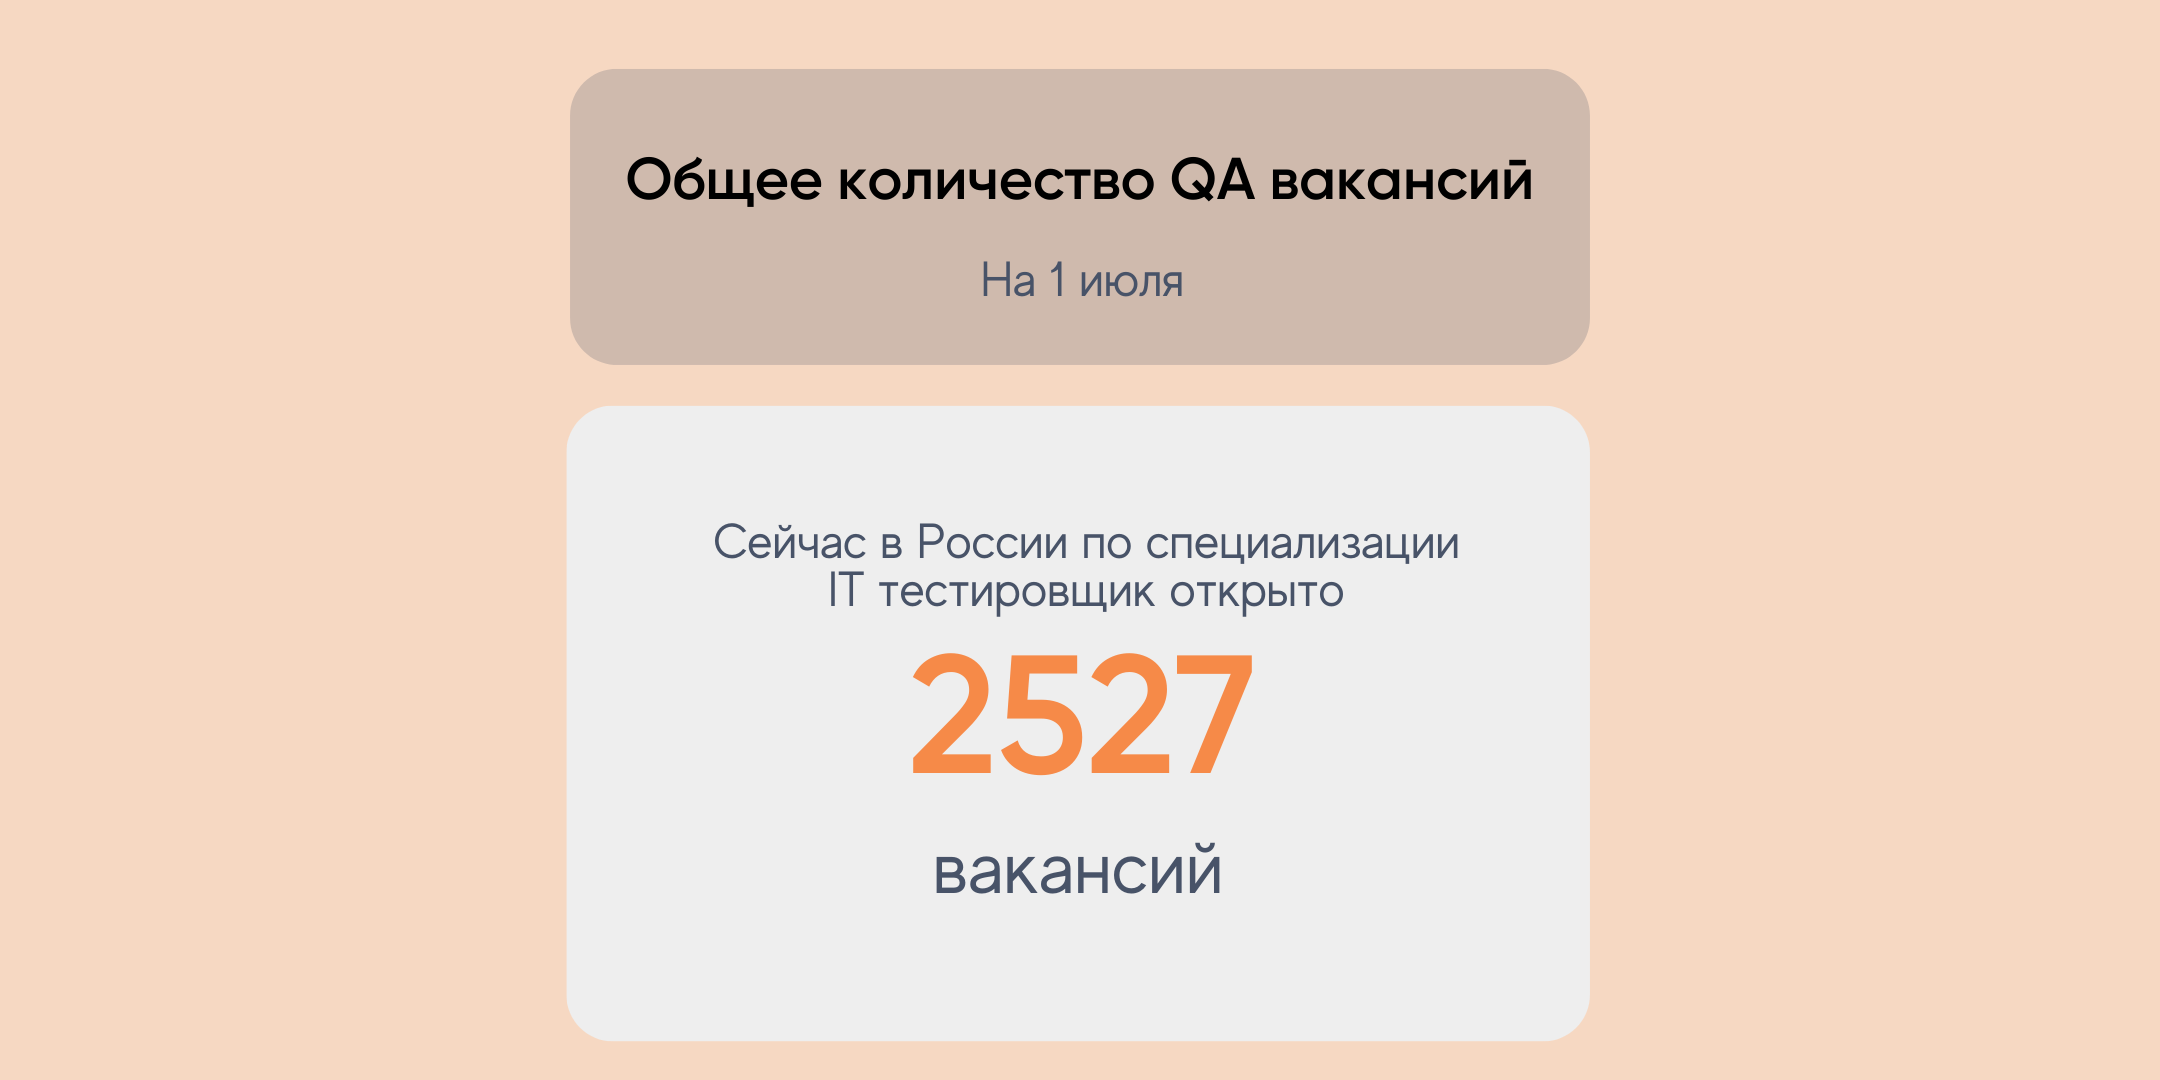 Общее количество QA вакансий в РФ на 1 июля